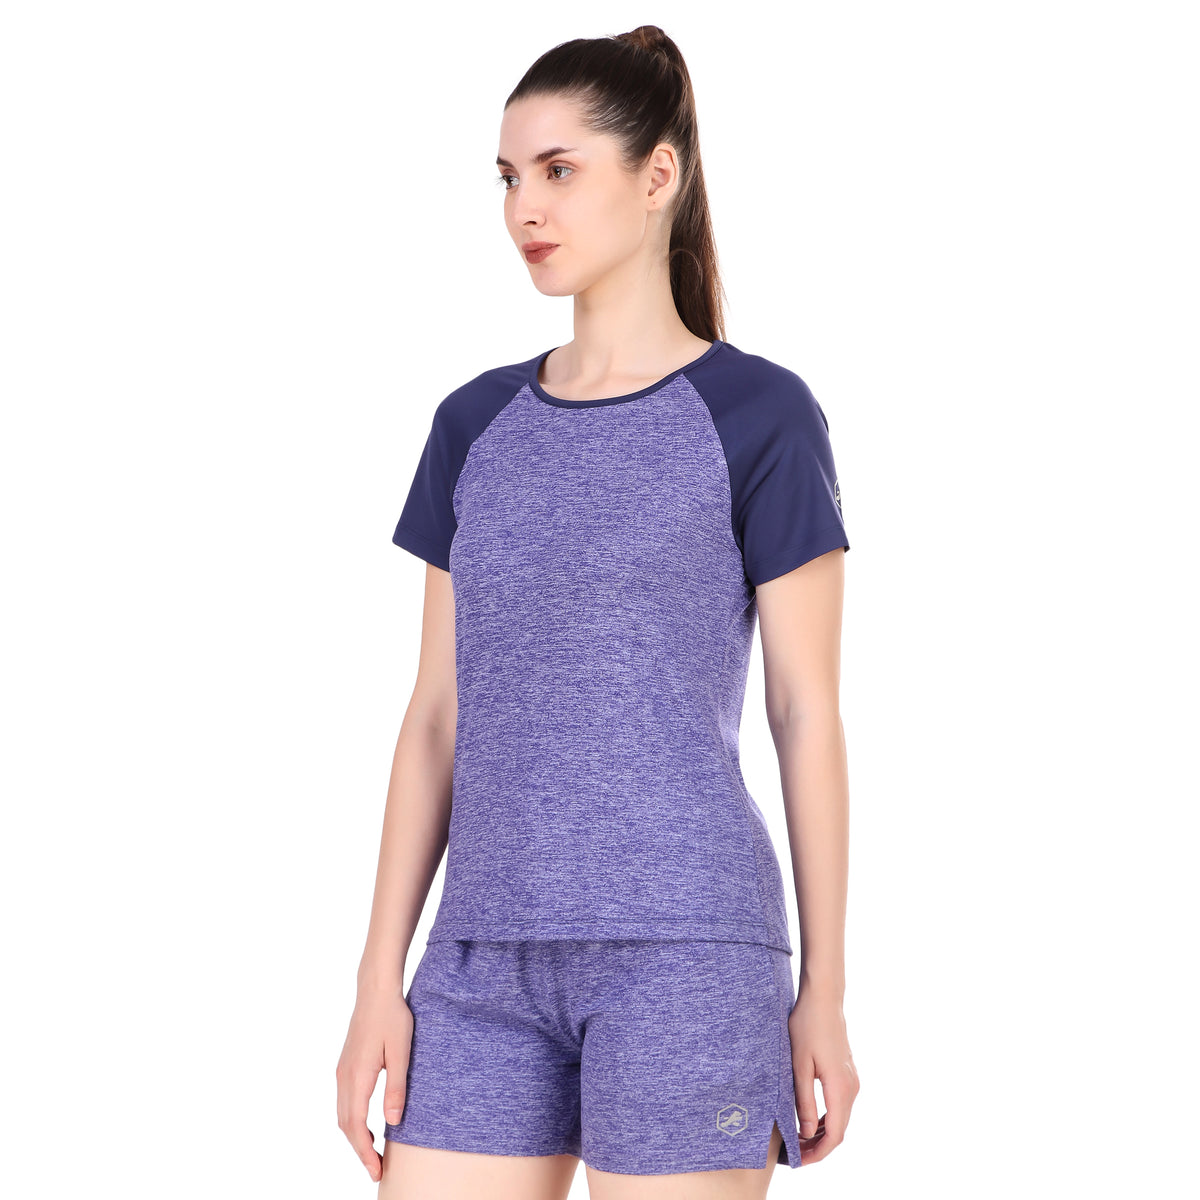 Performance Raglan Sleeves Tshirt For Women (Purple Heather)